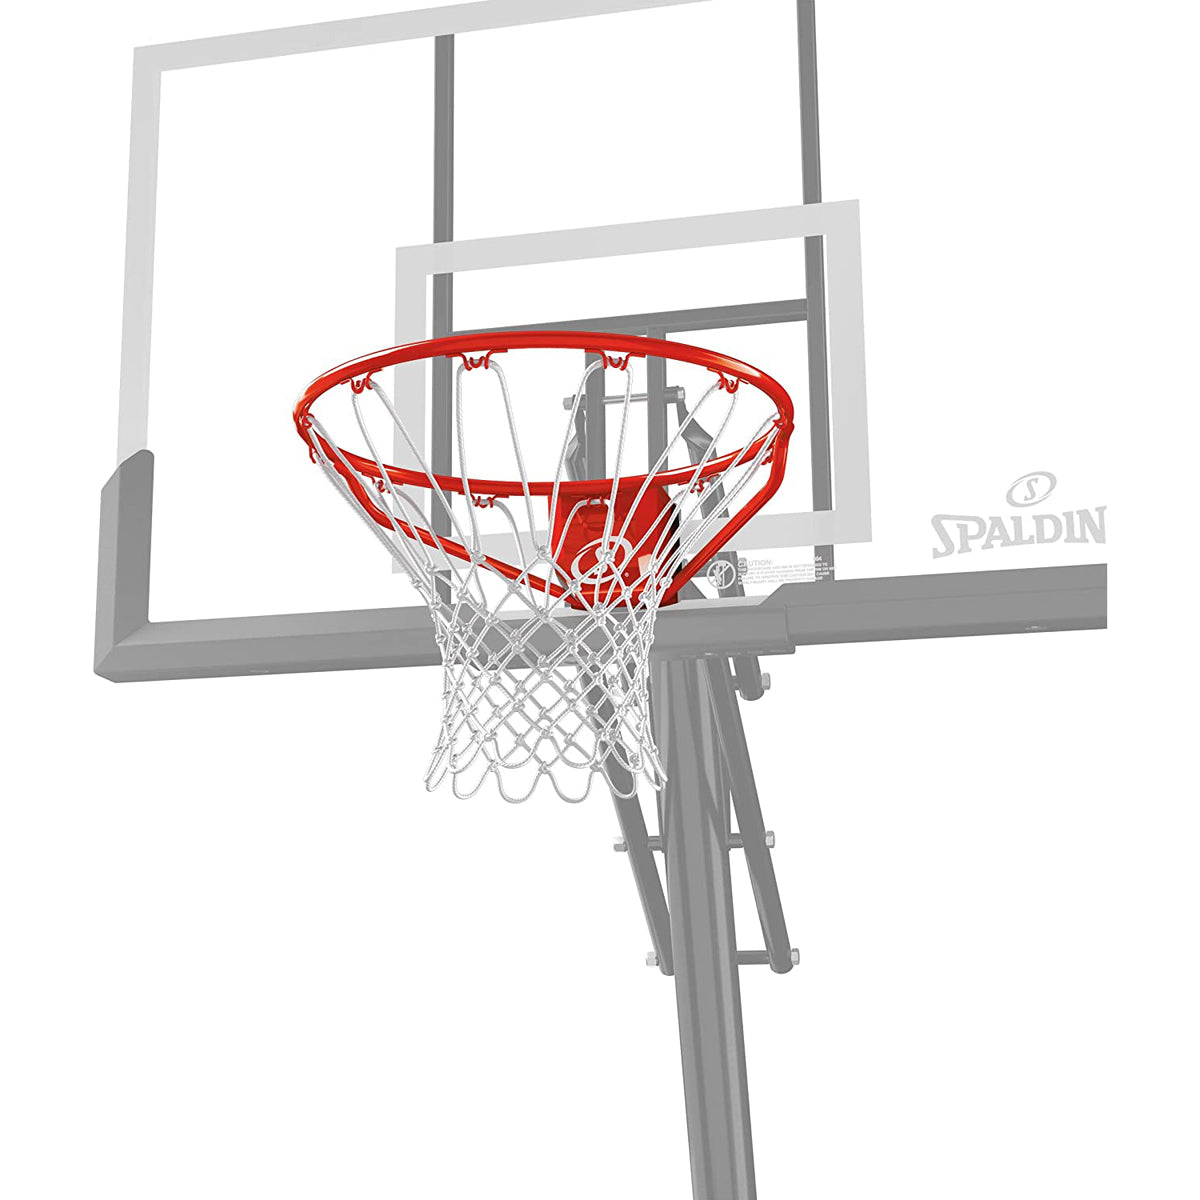 Spalding Pro Slam Outdoor Basketball Rim - Red Spalding